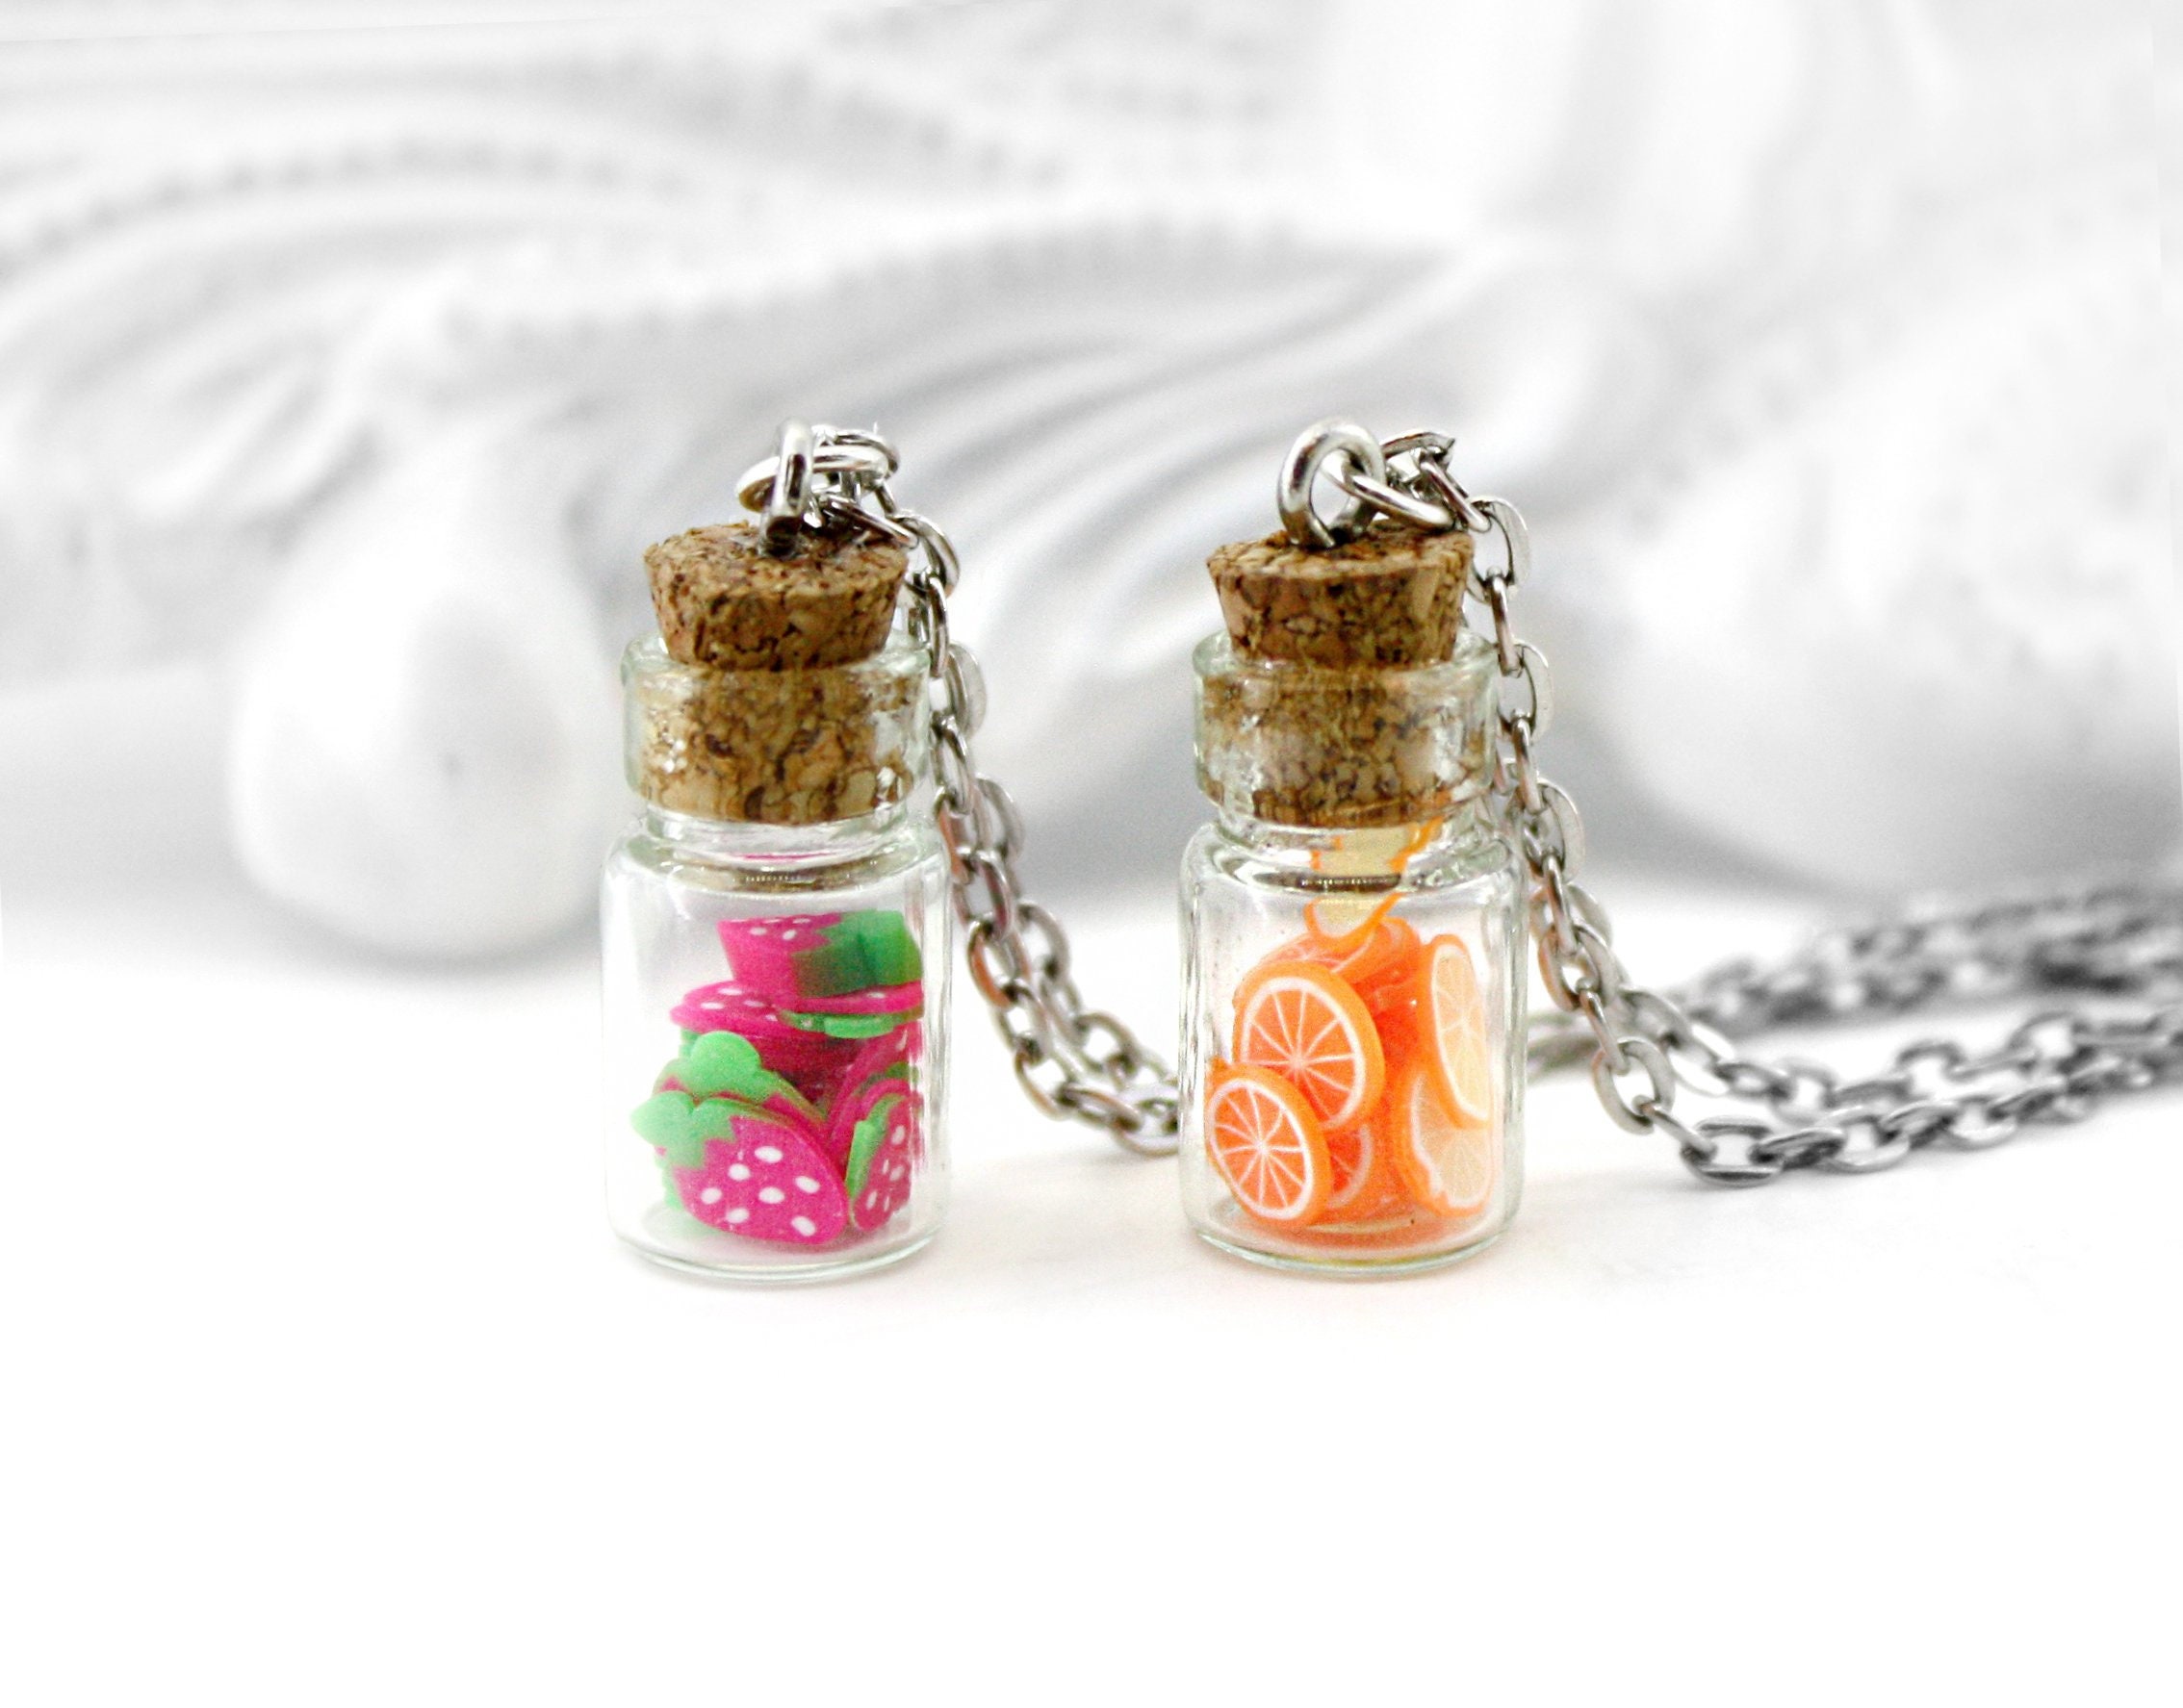 10x Mini DIY Resin Wishing Bottle Fruit Pendant Mini Cute Charms Jewelry  Making